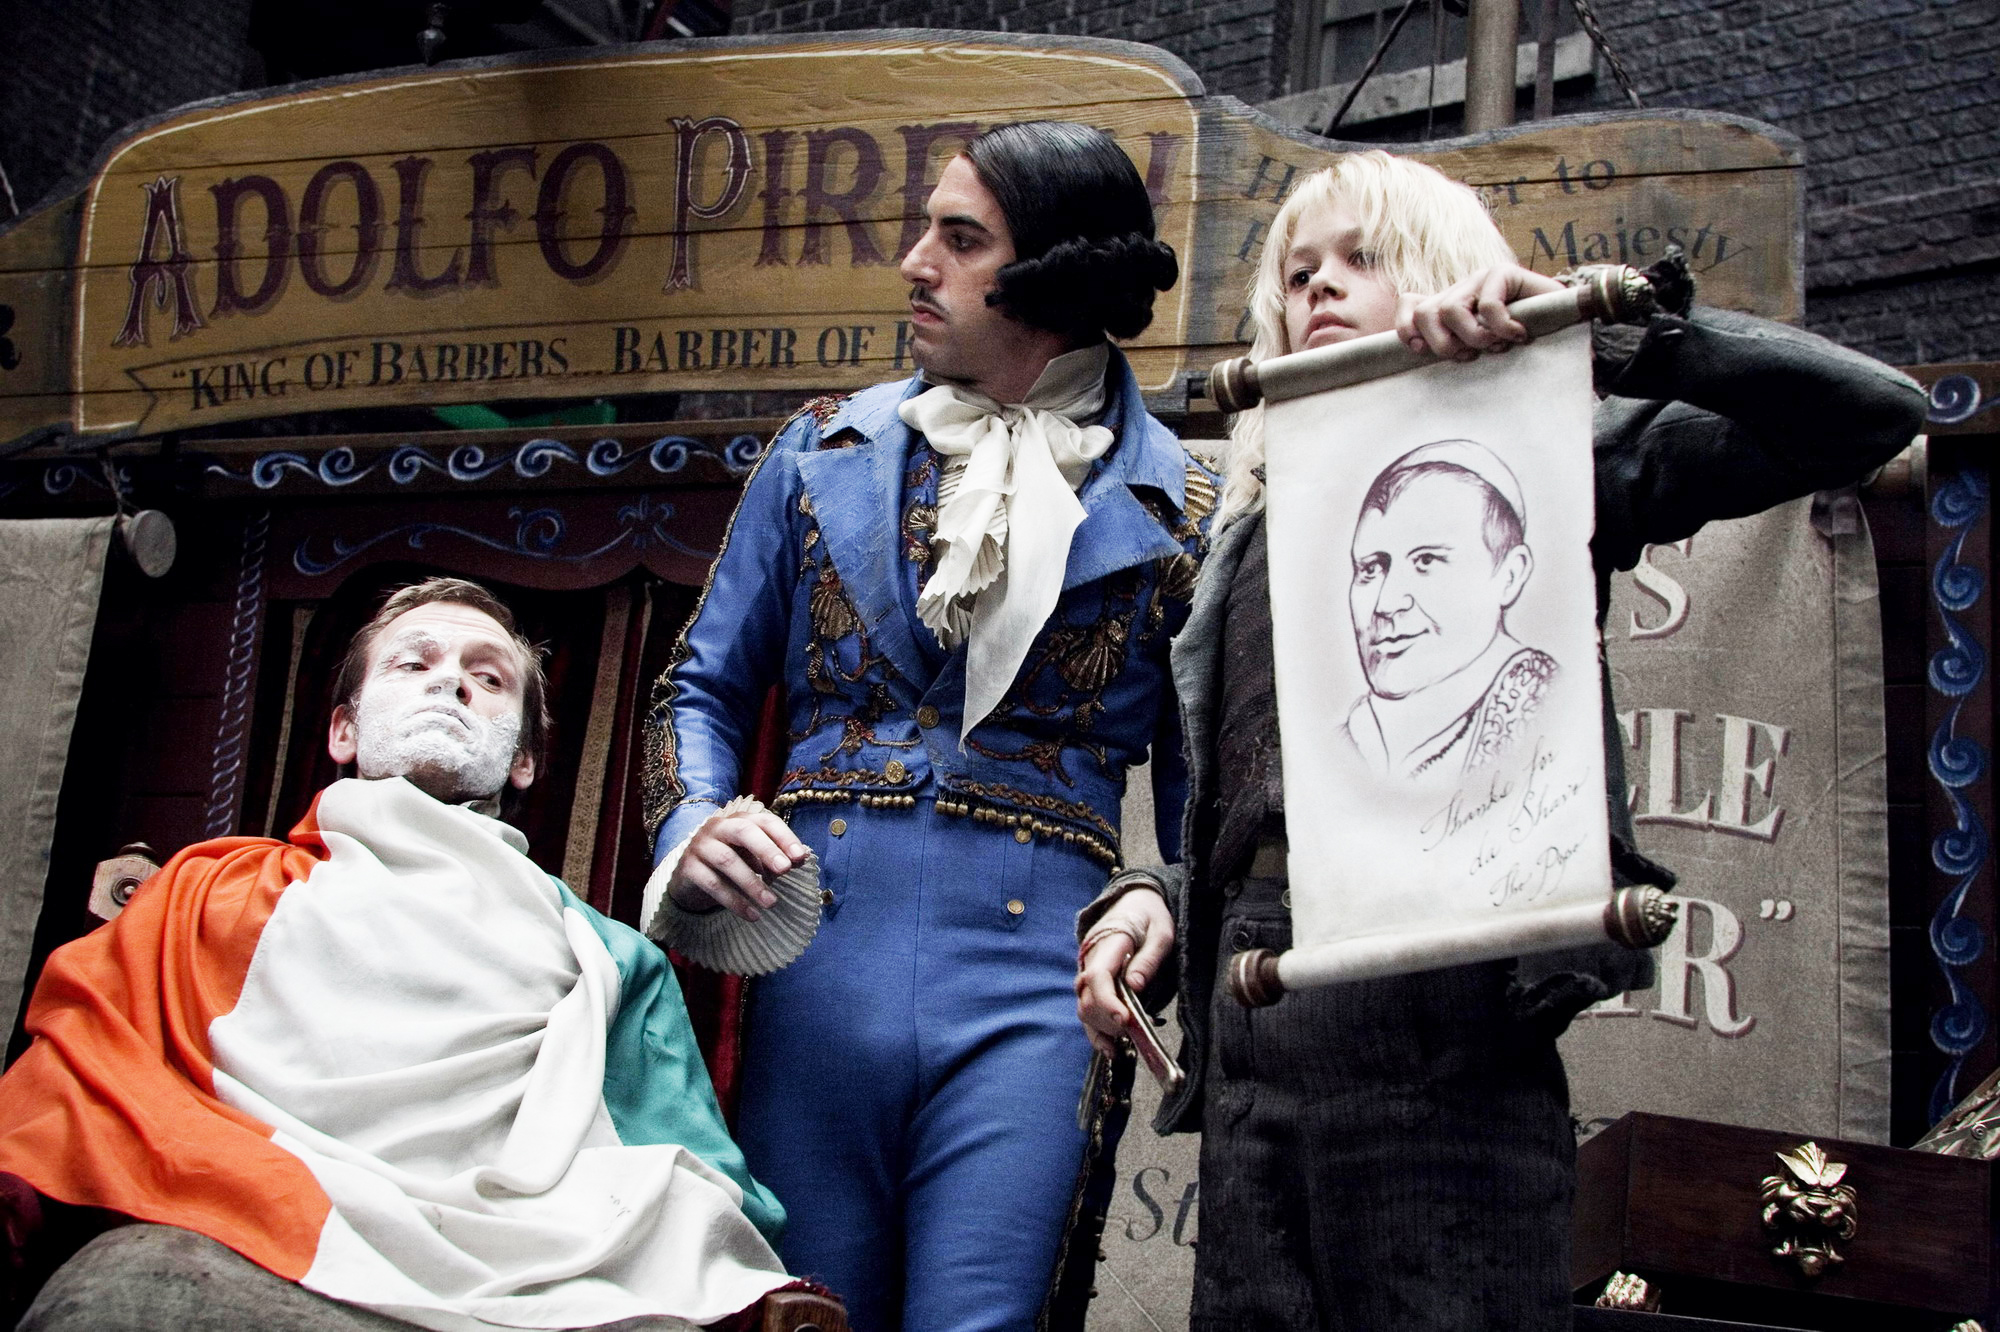 Sacha Baron Cohen as Signor Adolfo Pirelli in Sweeney Todd: The Demon Barber of Fleet Street, 2007.